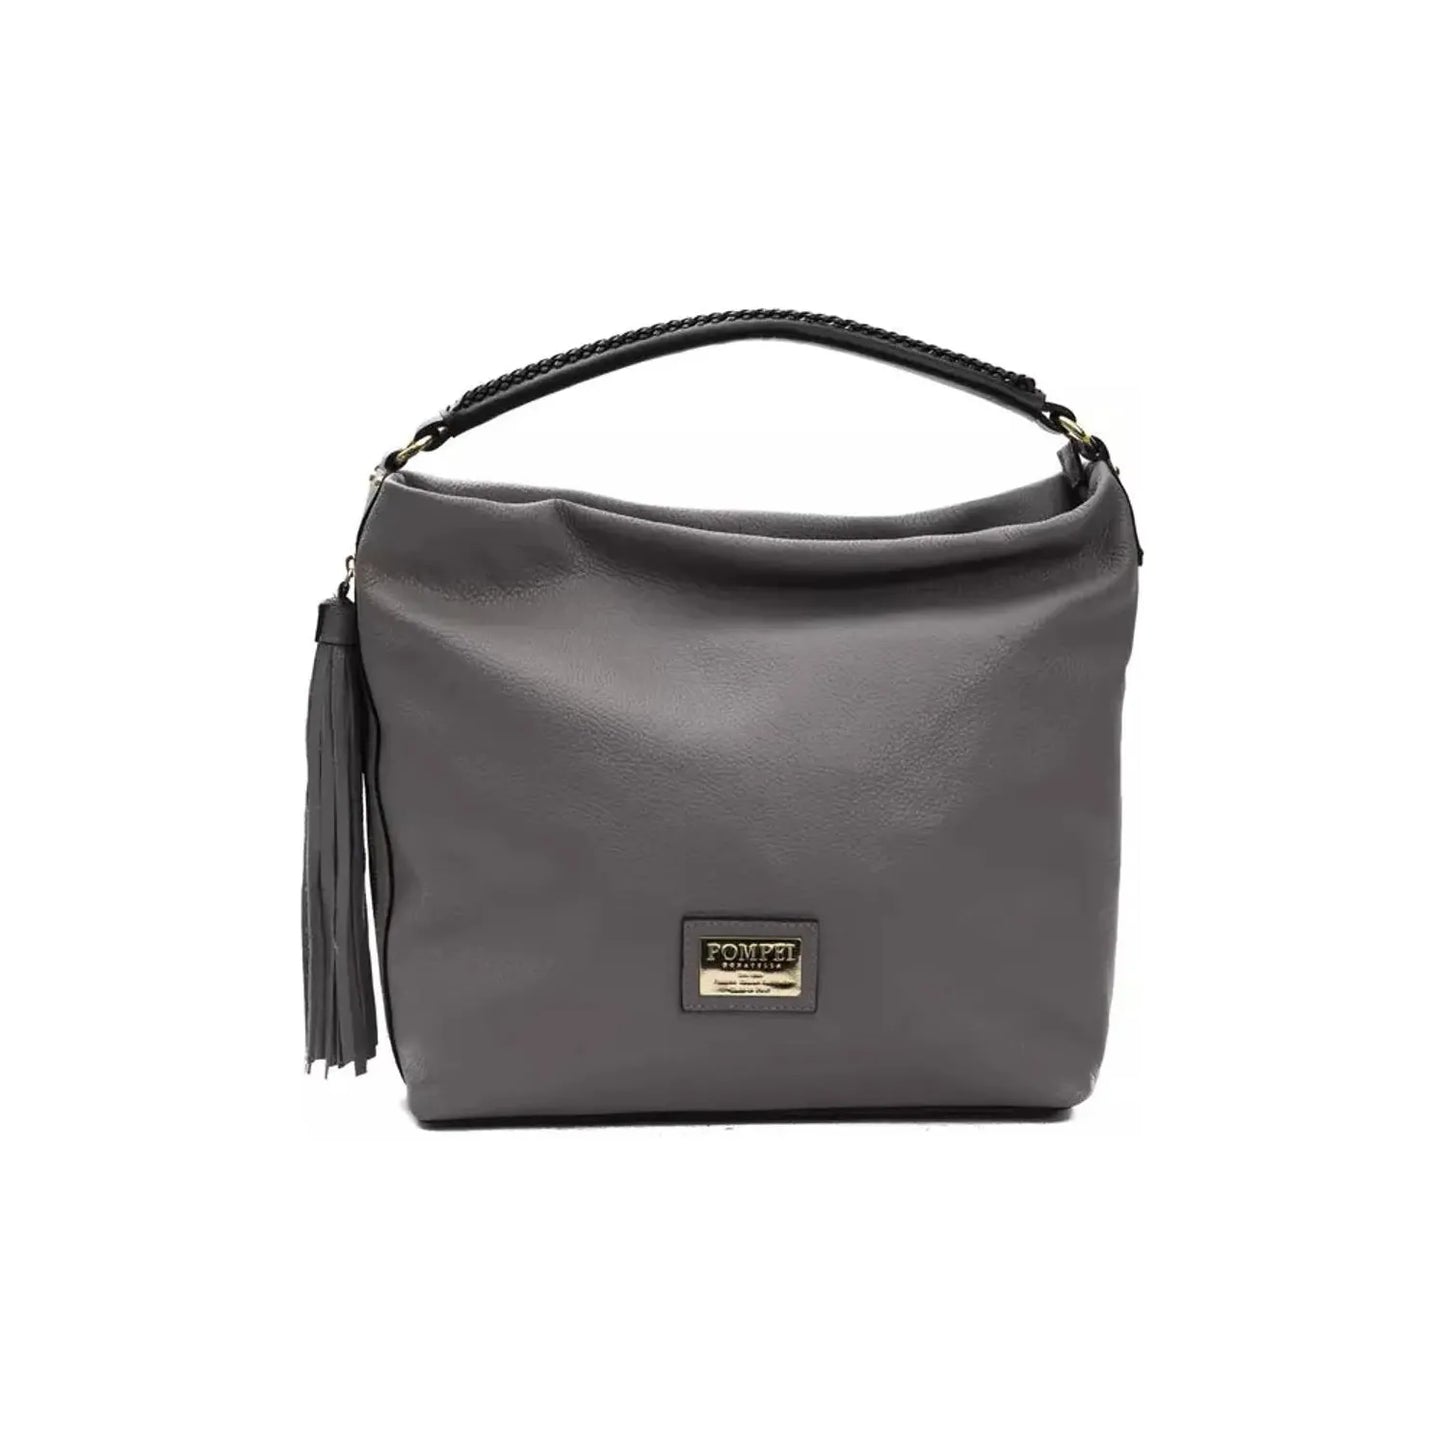 Pompei Donatella Chic Gray Leather Shoulder Bag WOMAN SHOULDER BAGS gray-leather-shoulder-bag-2 stock_product_image_5800_703569538-23-7e10d795-62f.webp